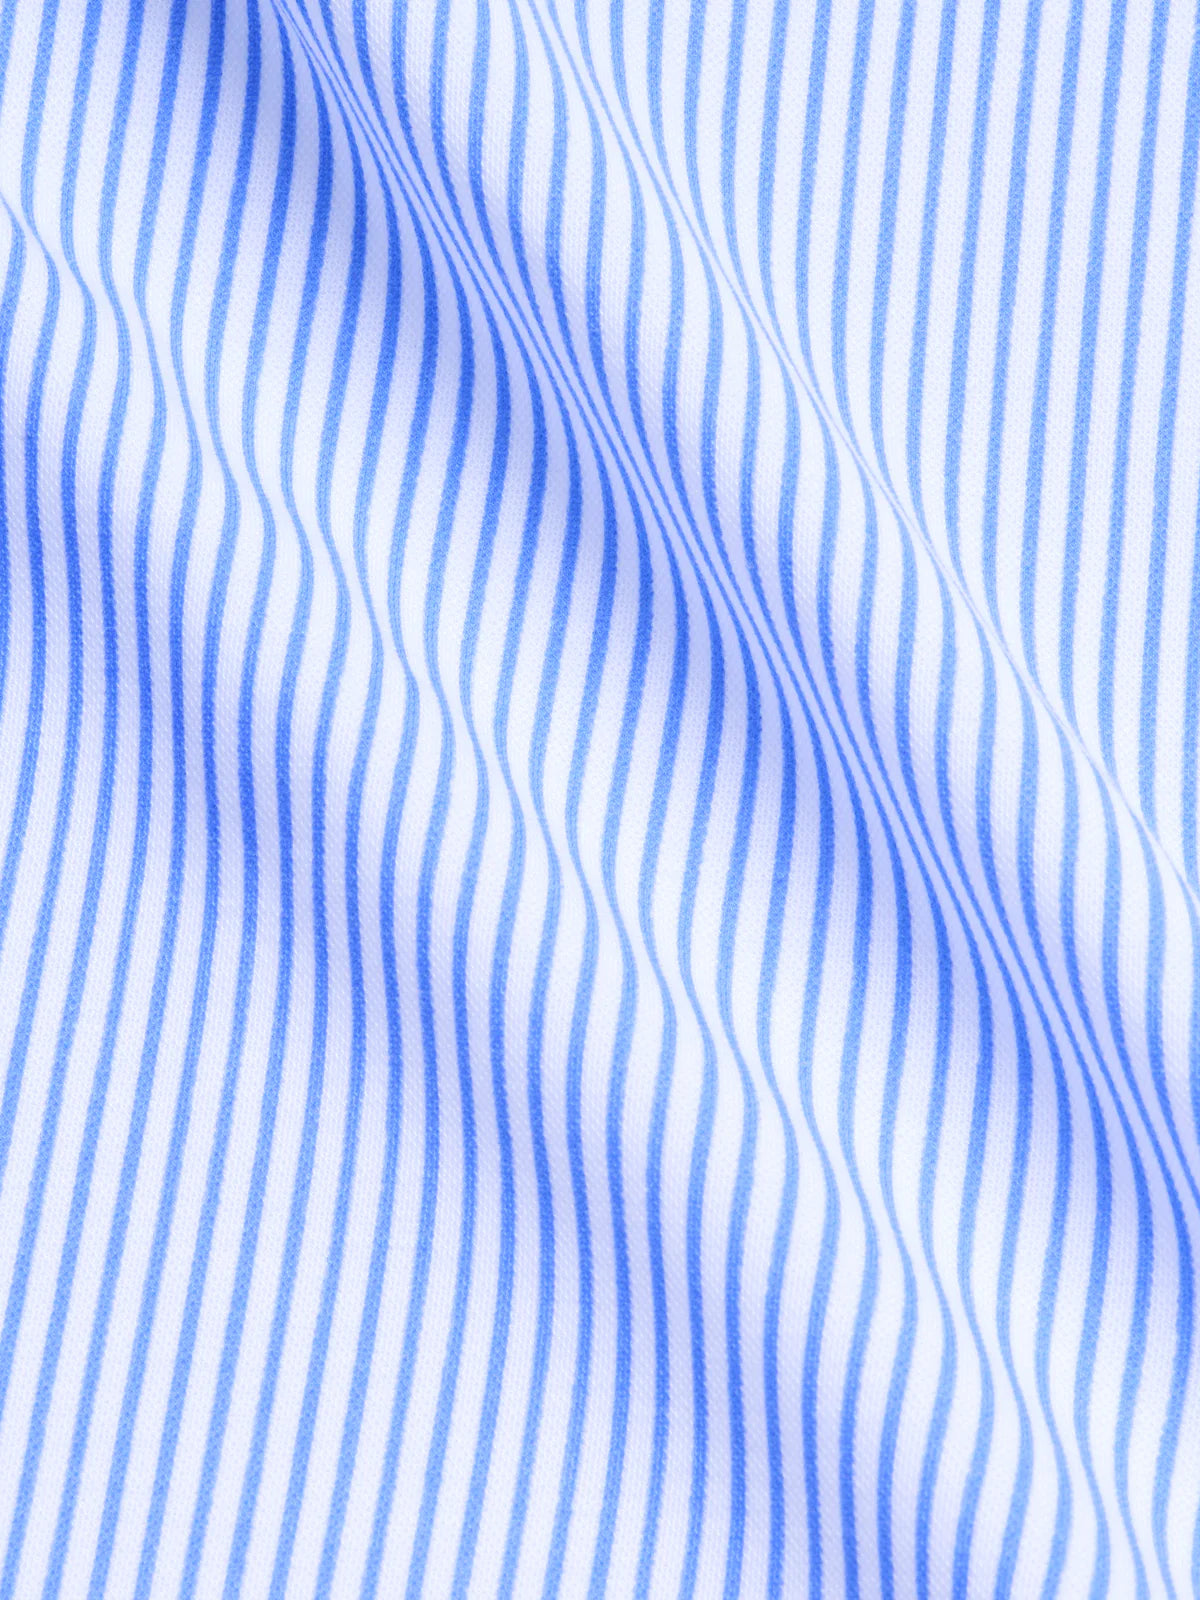 xShirt 4.0 Blue Striped